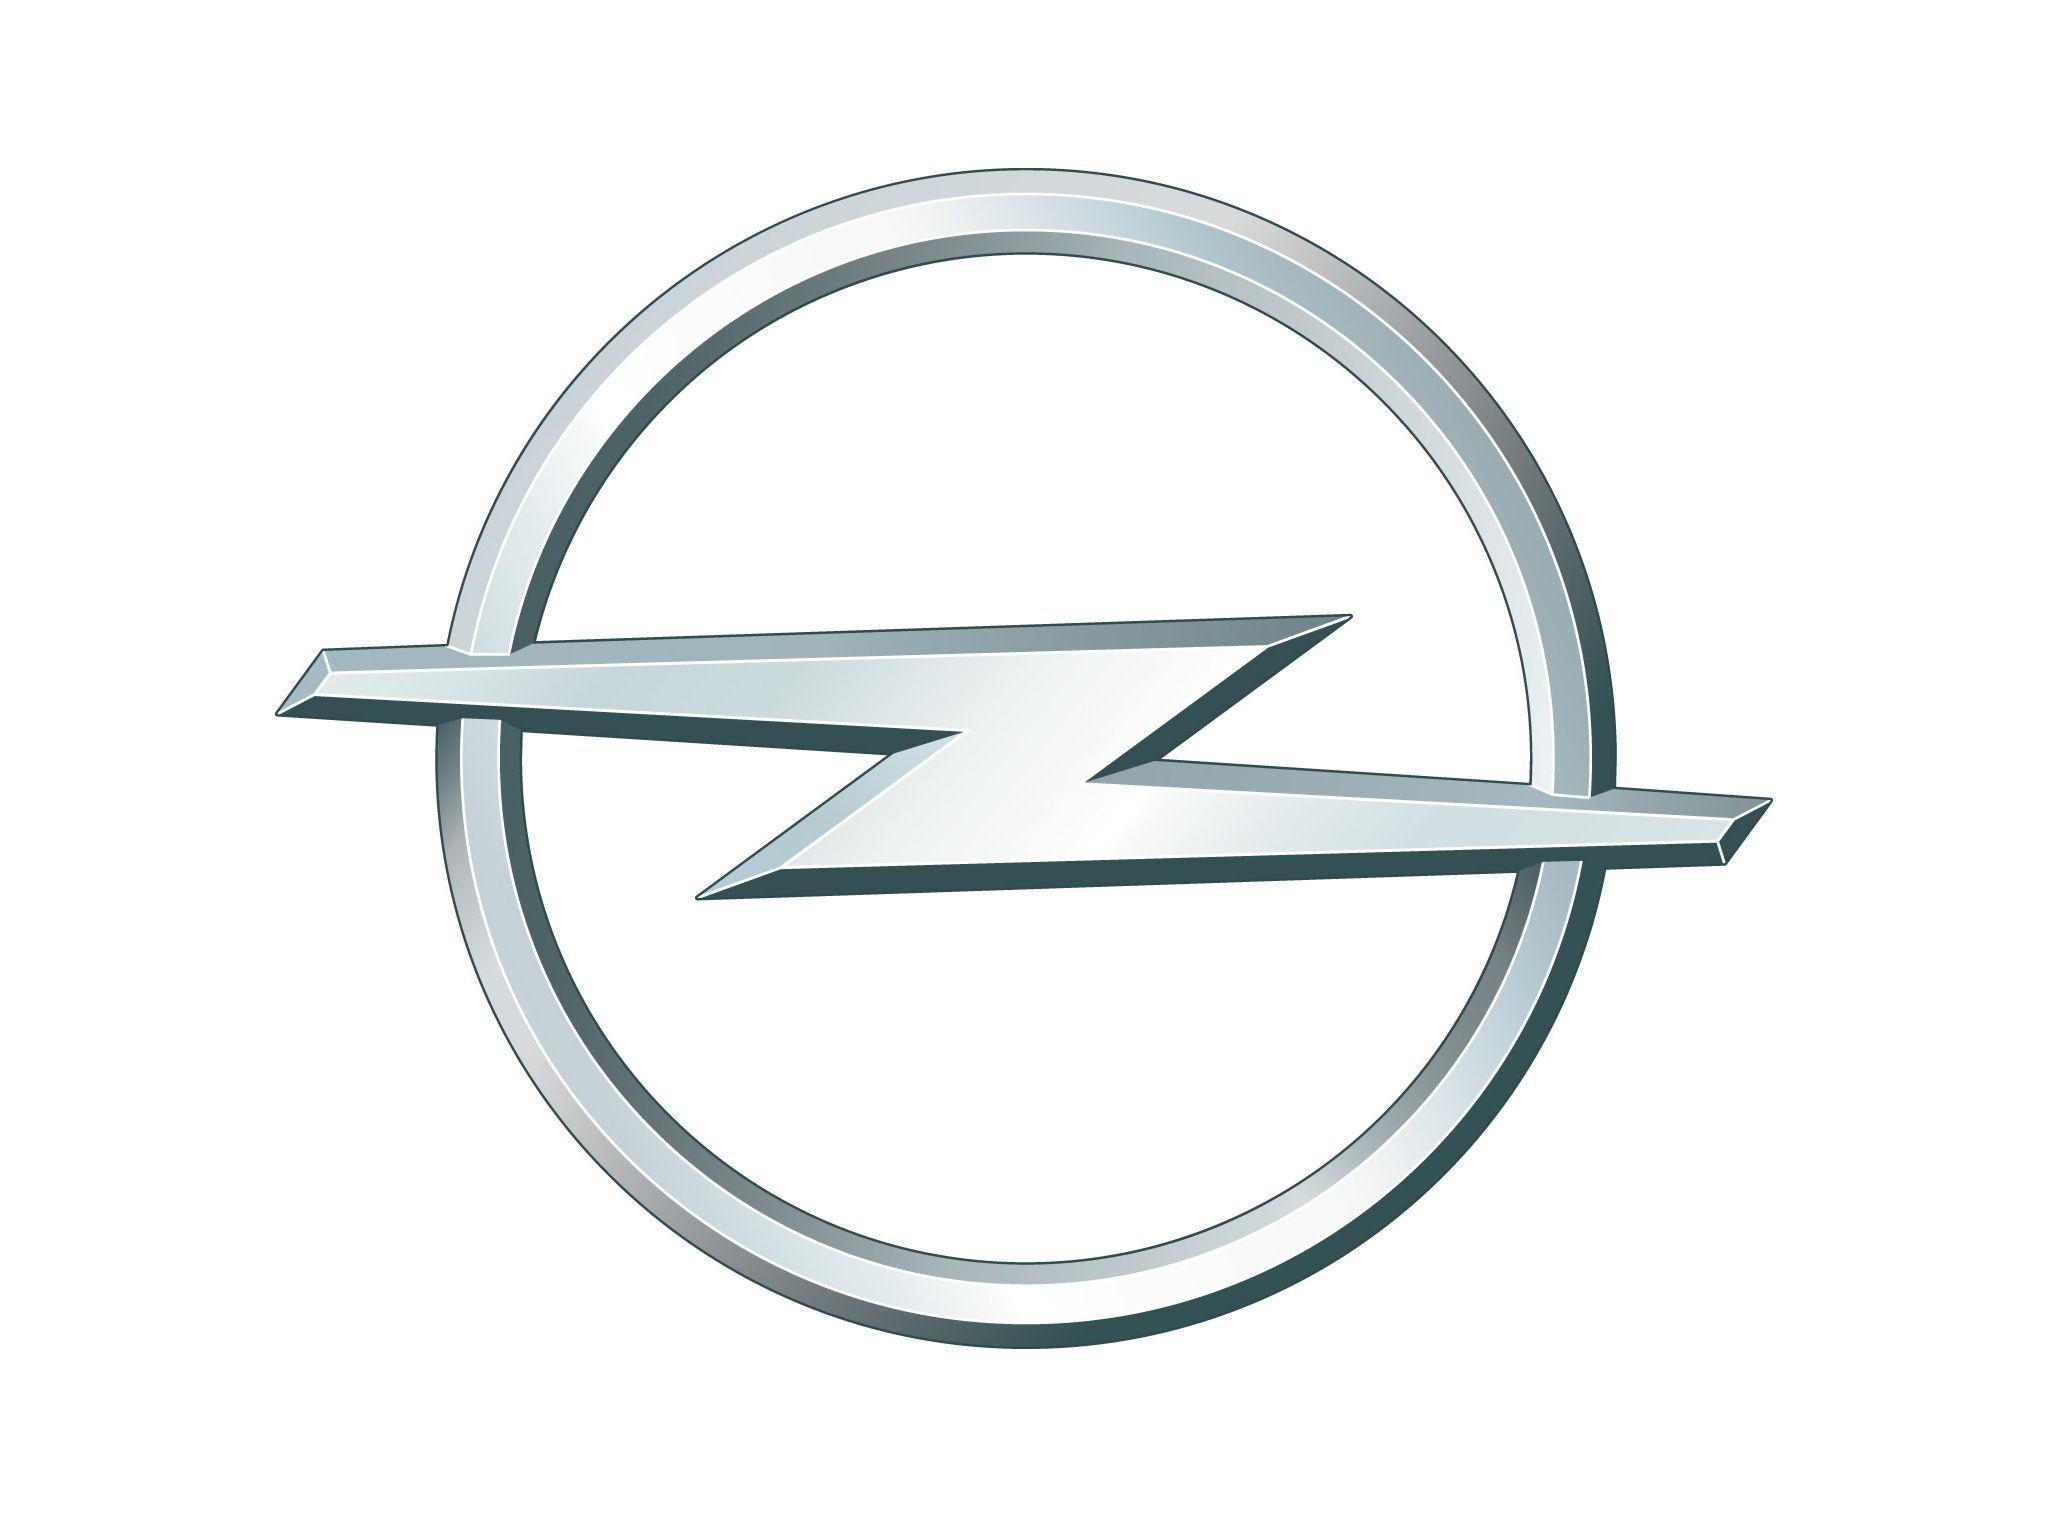 Lightning Bolt Car Logo - Opel Logo, Opel Car Symbol and History | Car Brand Names.com